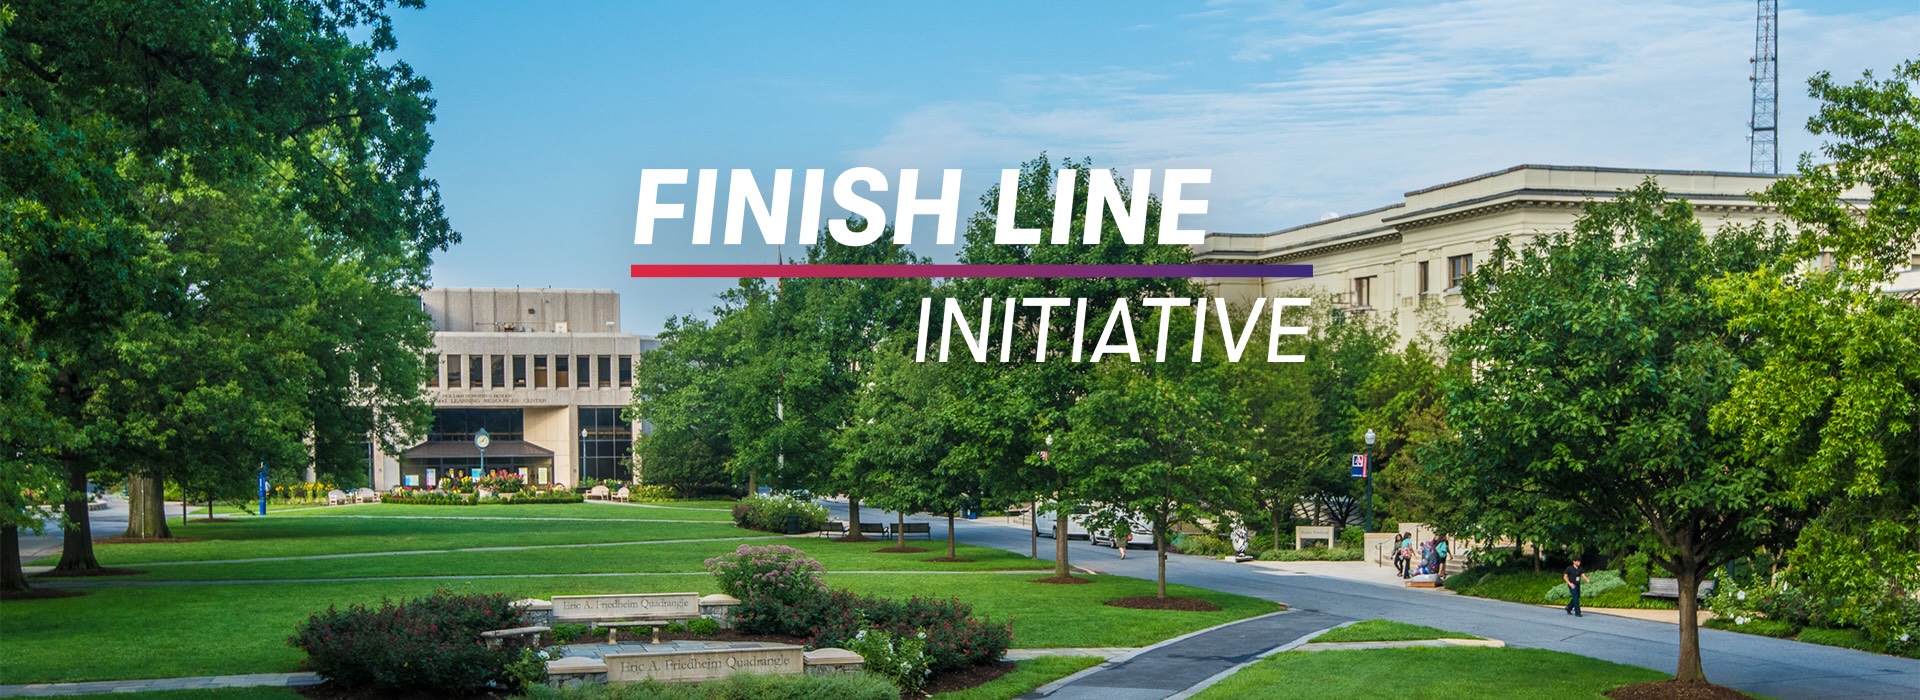 Finish Line Intitiative overlayed on campus quad